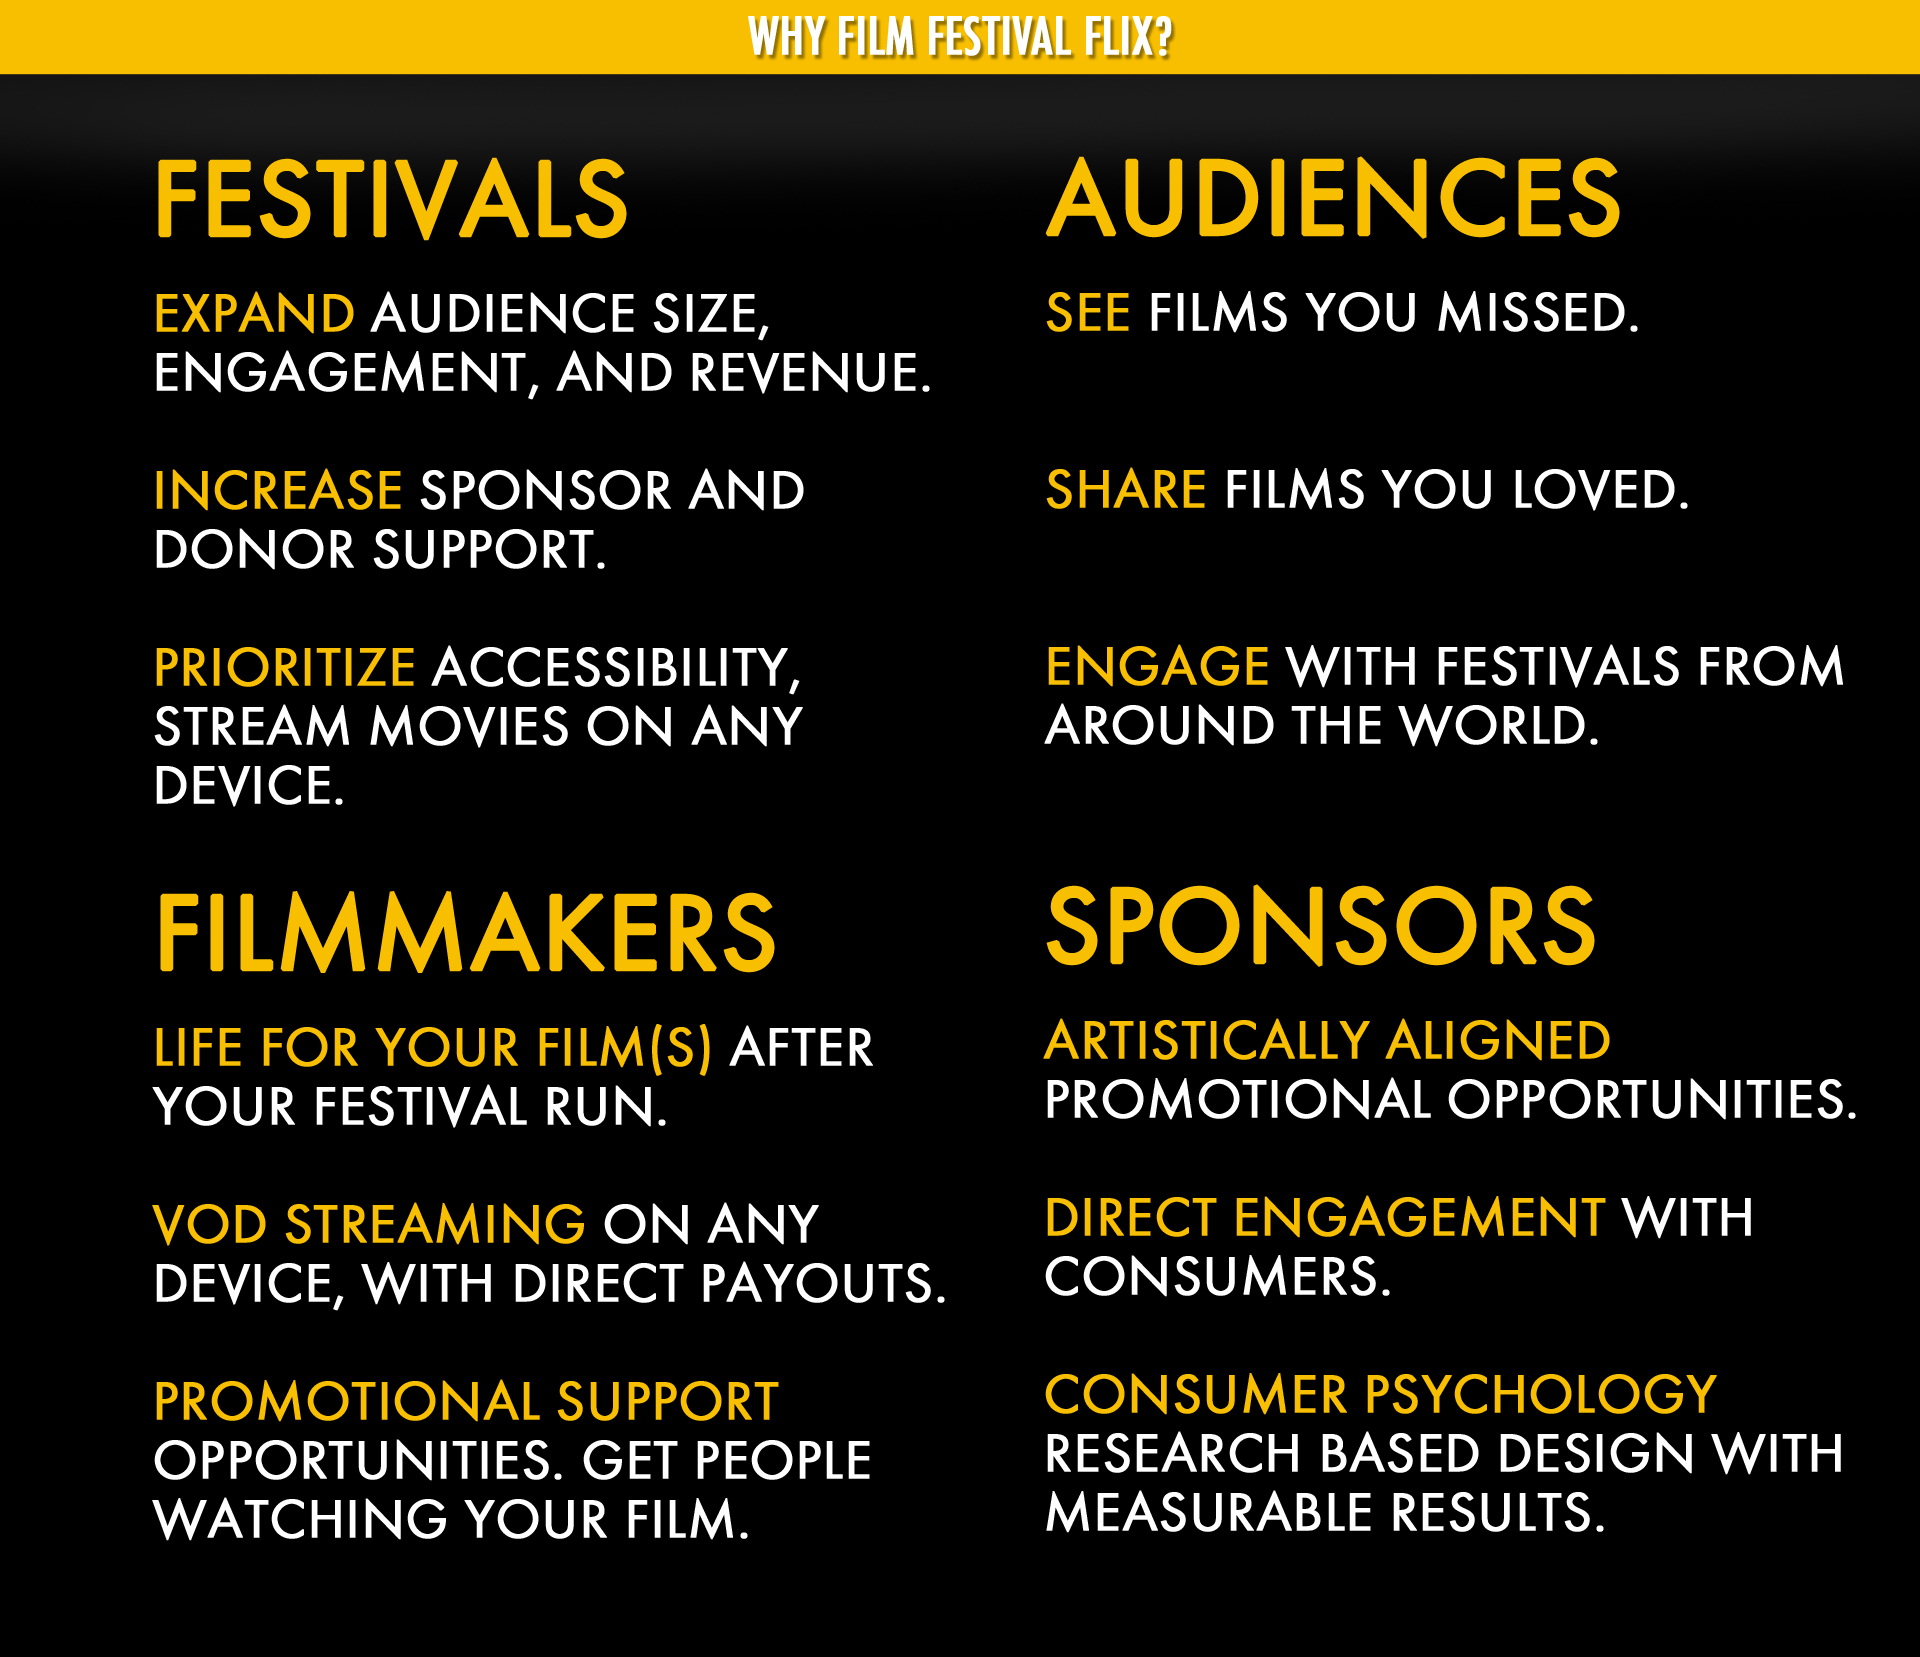 Film Festival Flix - About us - Benefits for Festivals, Audiences, Filmmakers, and Sponsors